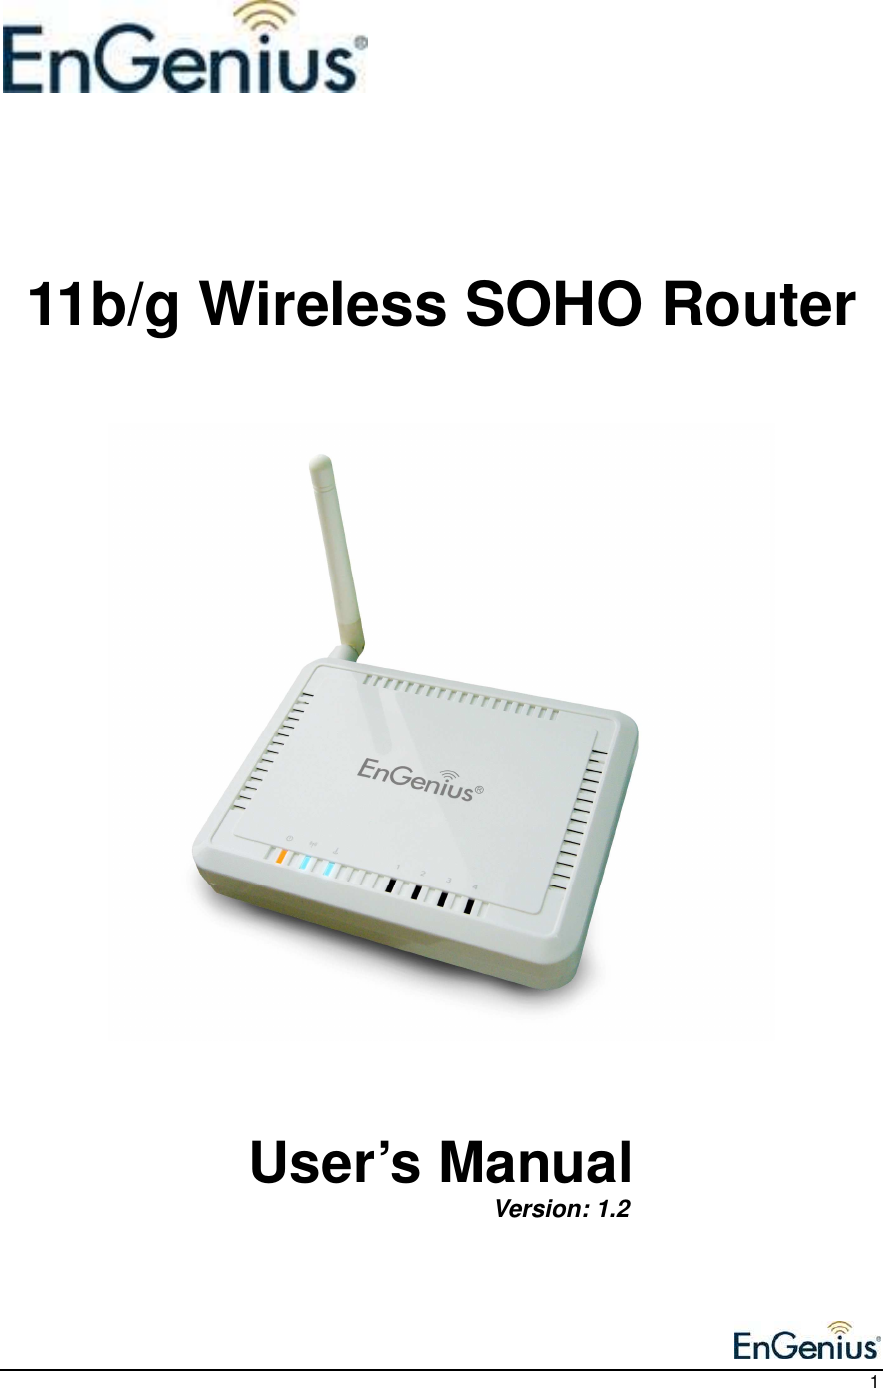  1     11b/g Wireless SOHO Router      User’s Manual    Version: 1.2  